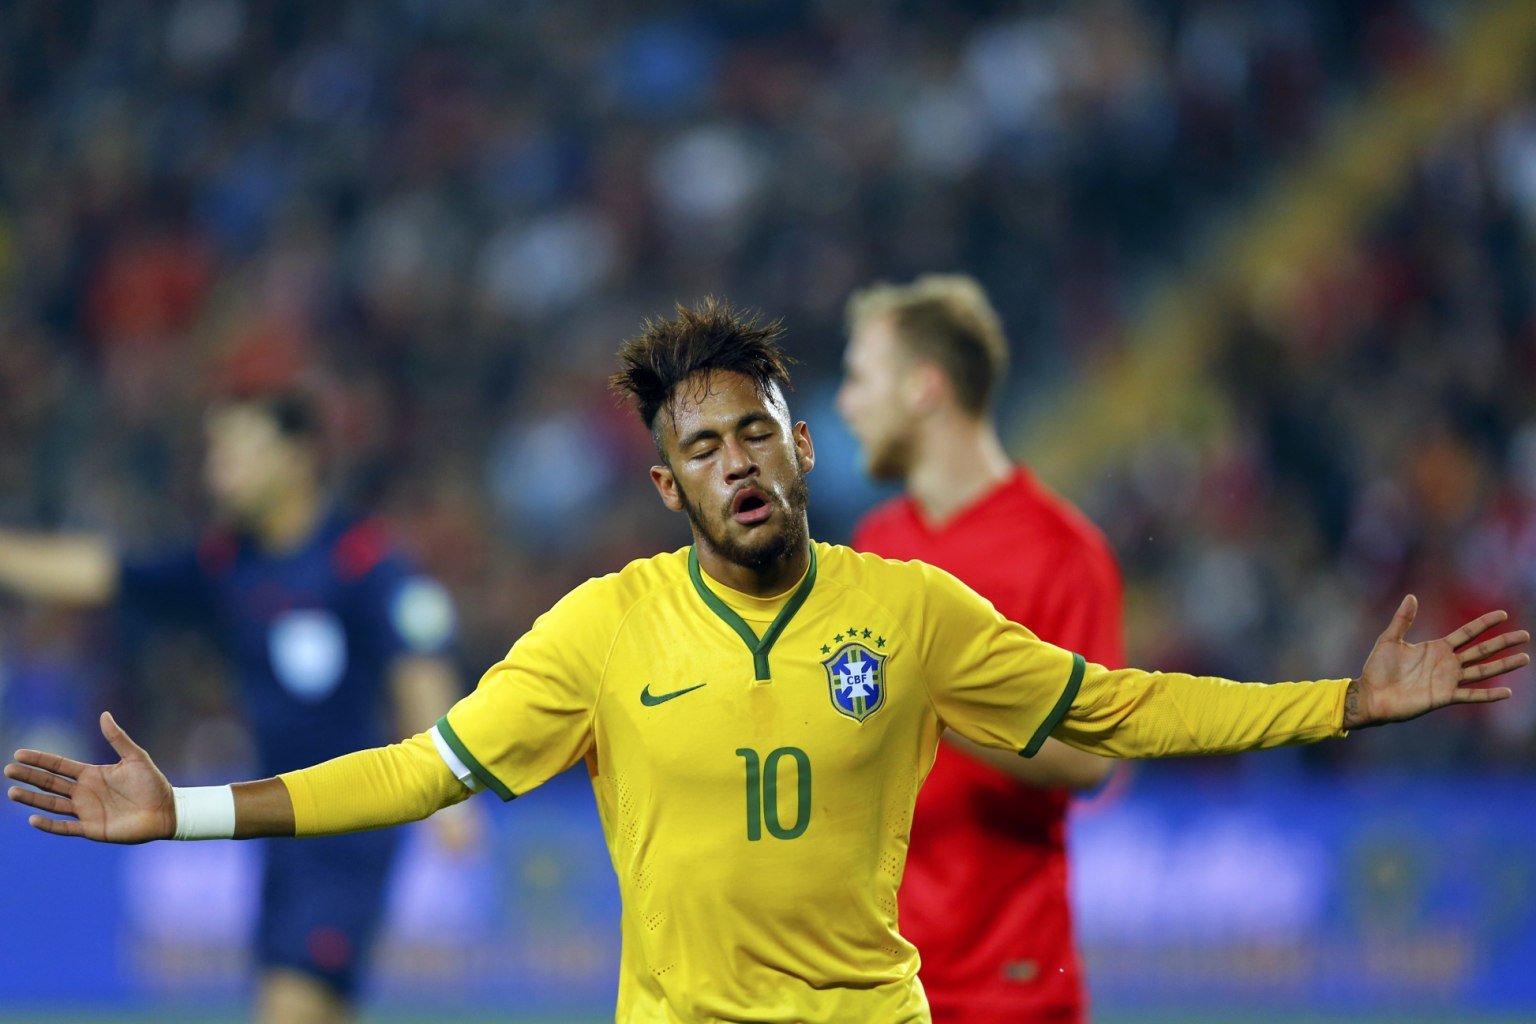 Neymar closing his eyes after scoring for Brazil